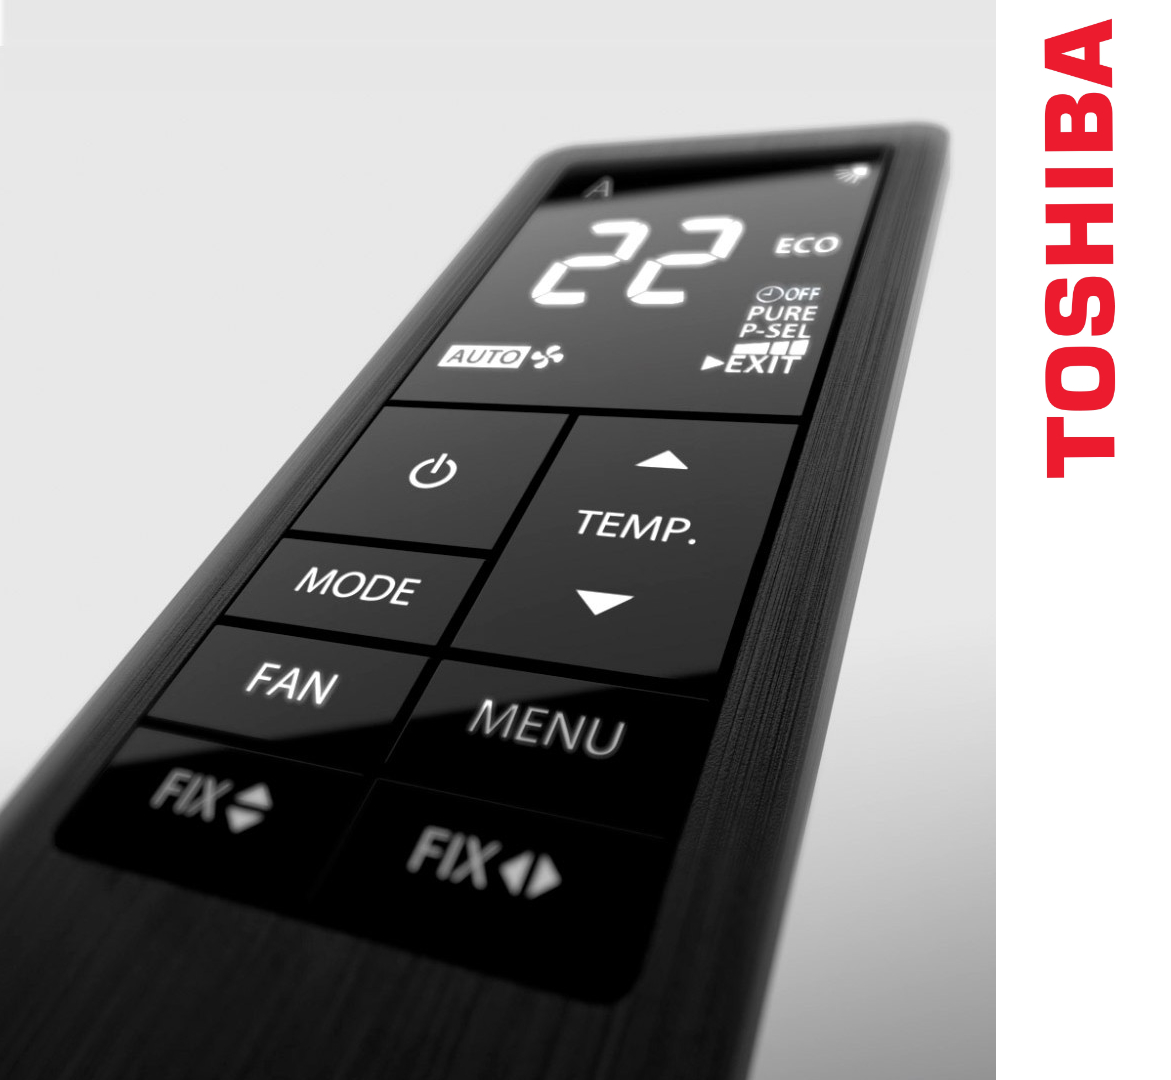 Split Aire acondicionado Toshiba Haori 10 1x1 Frío 2,5 kw / Calor 3,2 kw A+++ Wifi